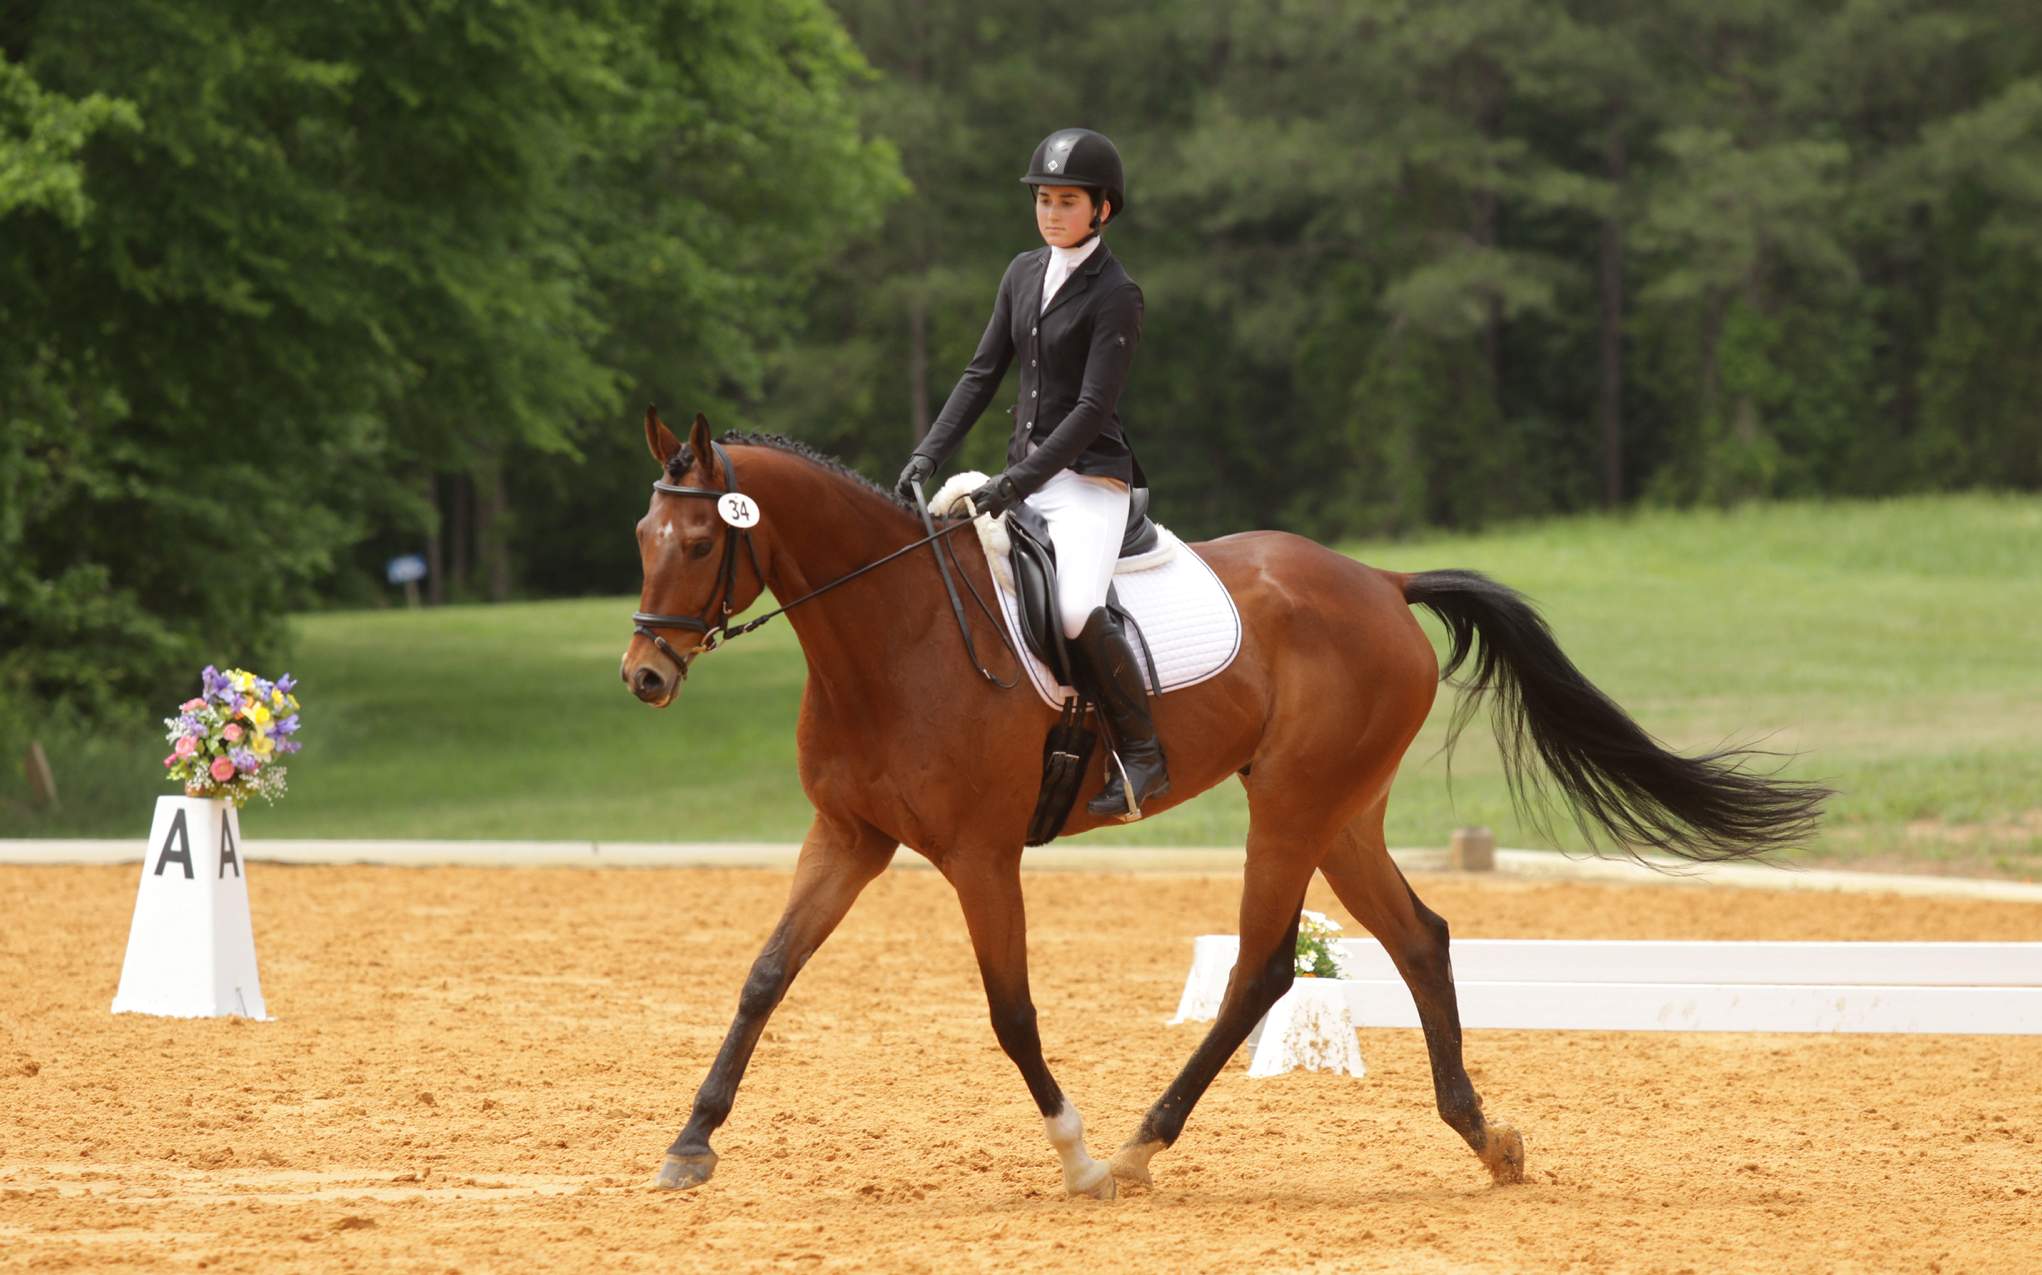 Francesca Toms climbing ranks in equestrian events